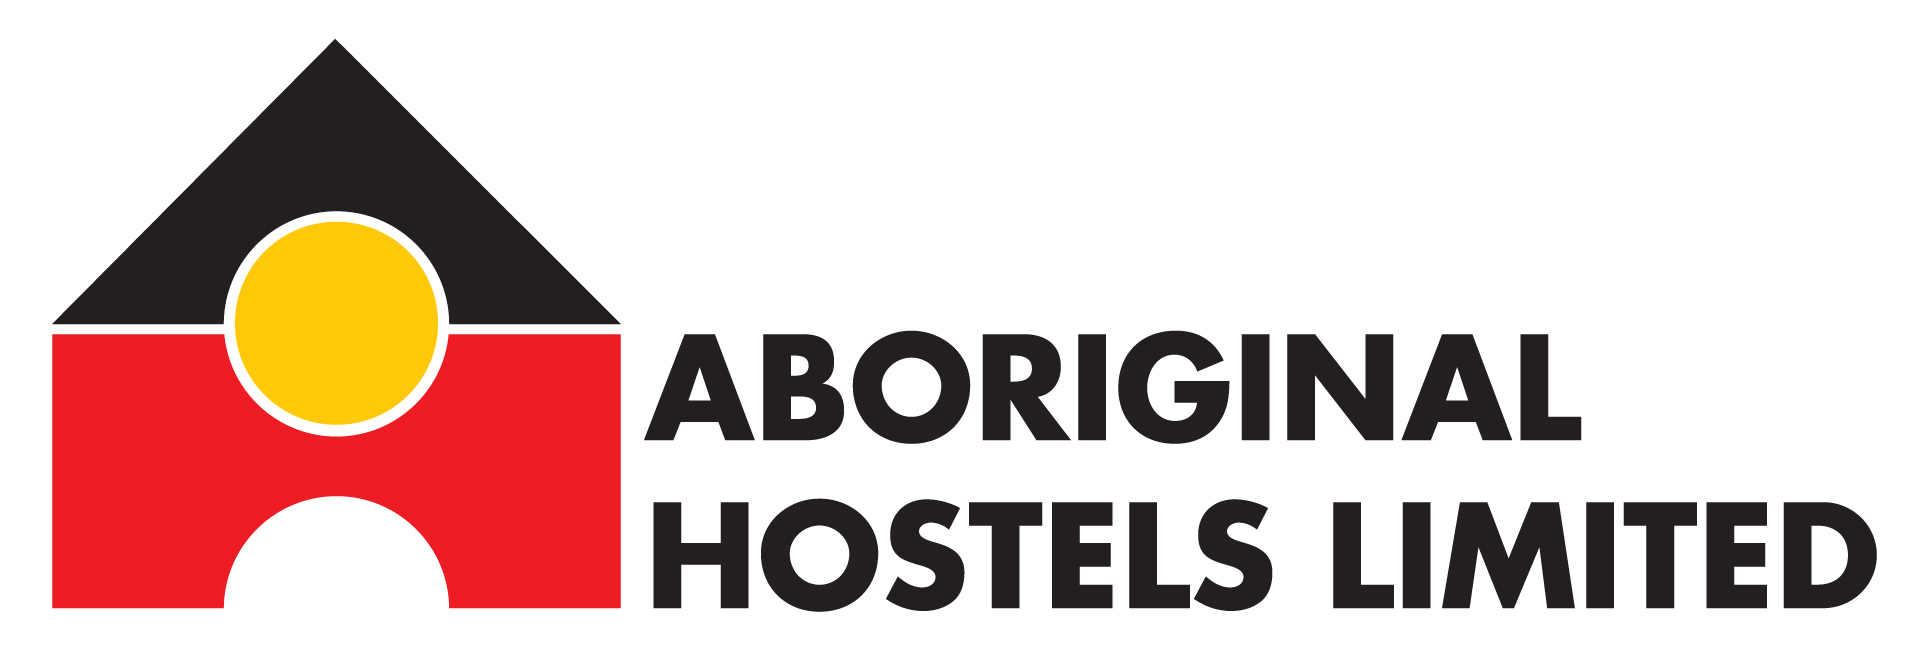 Logo: Aboriginal Hostels Limited.